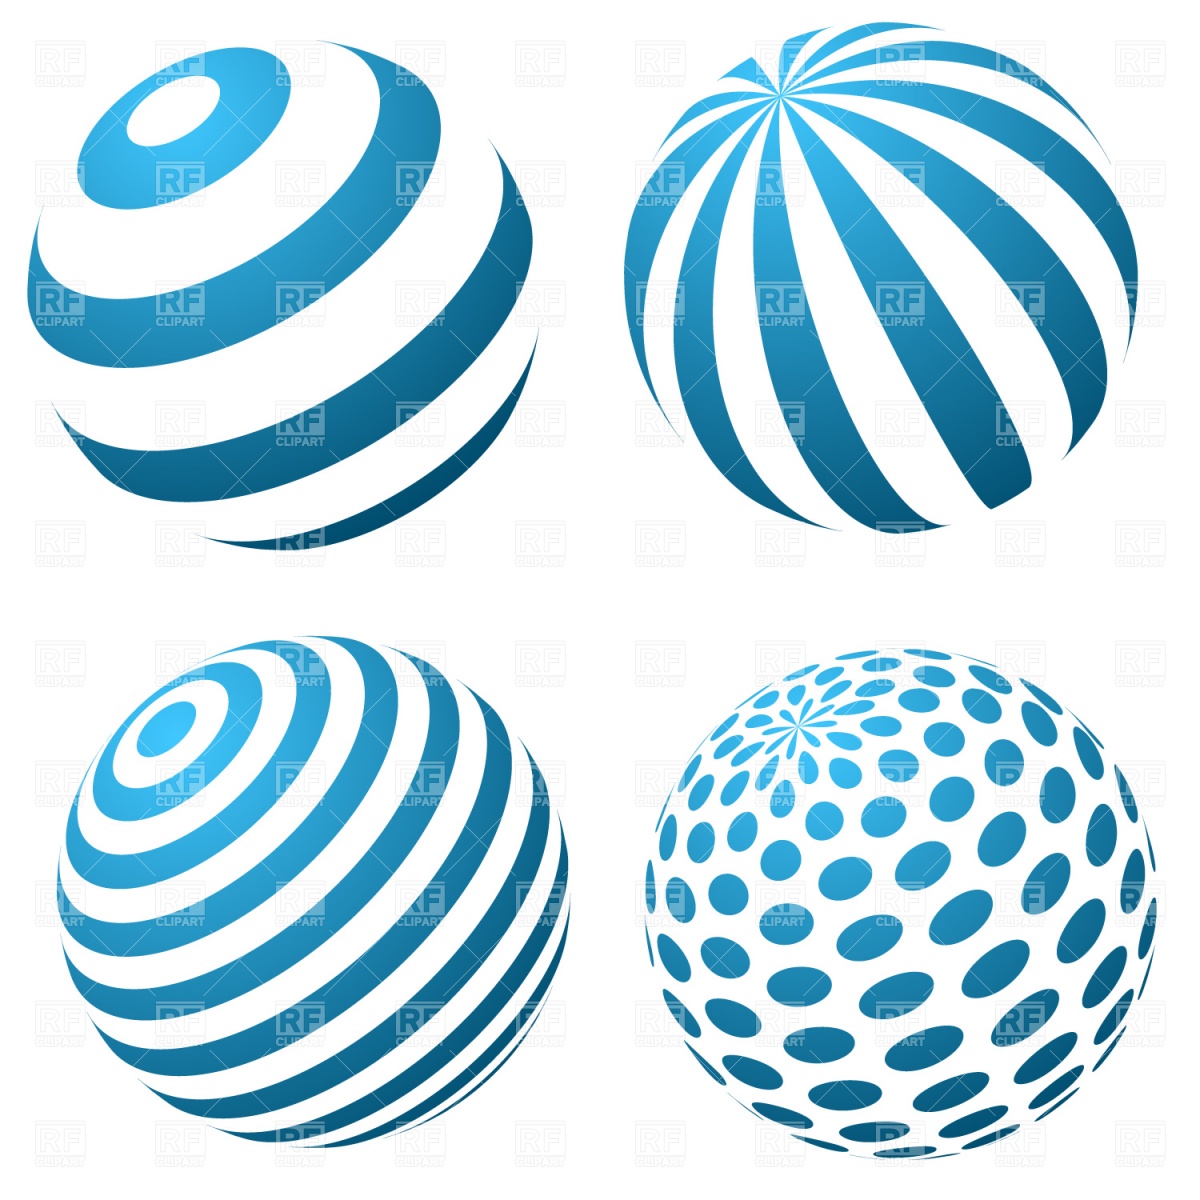 3D Sphere Vector Clip Art